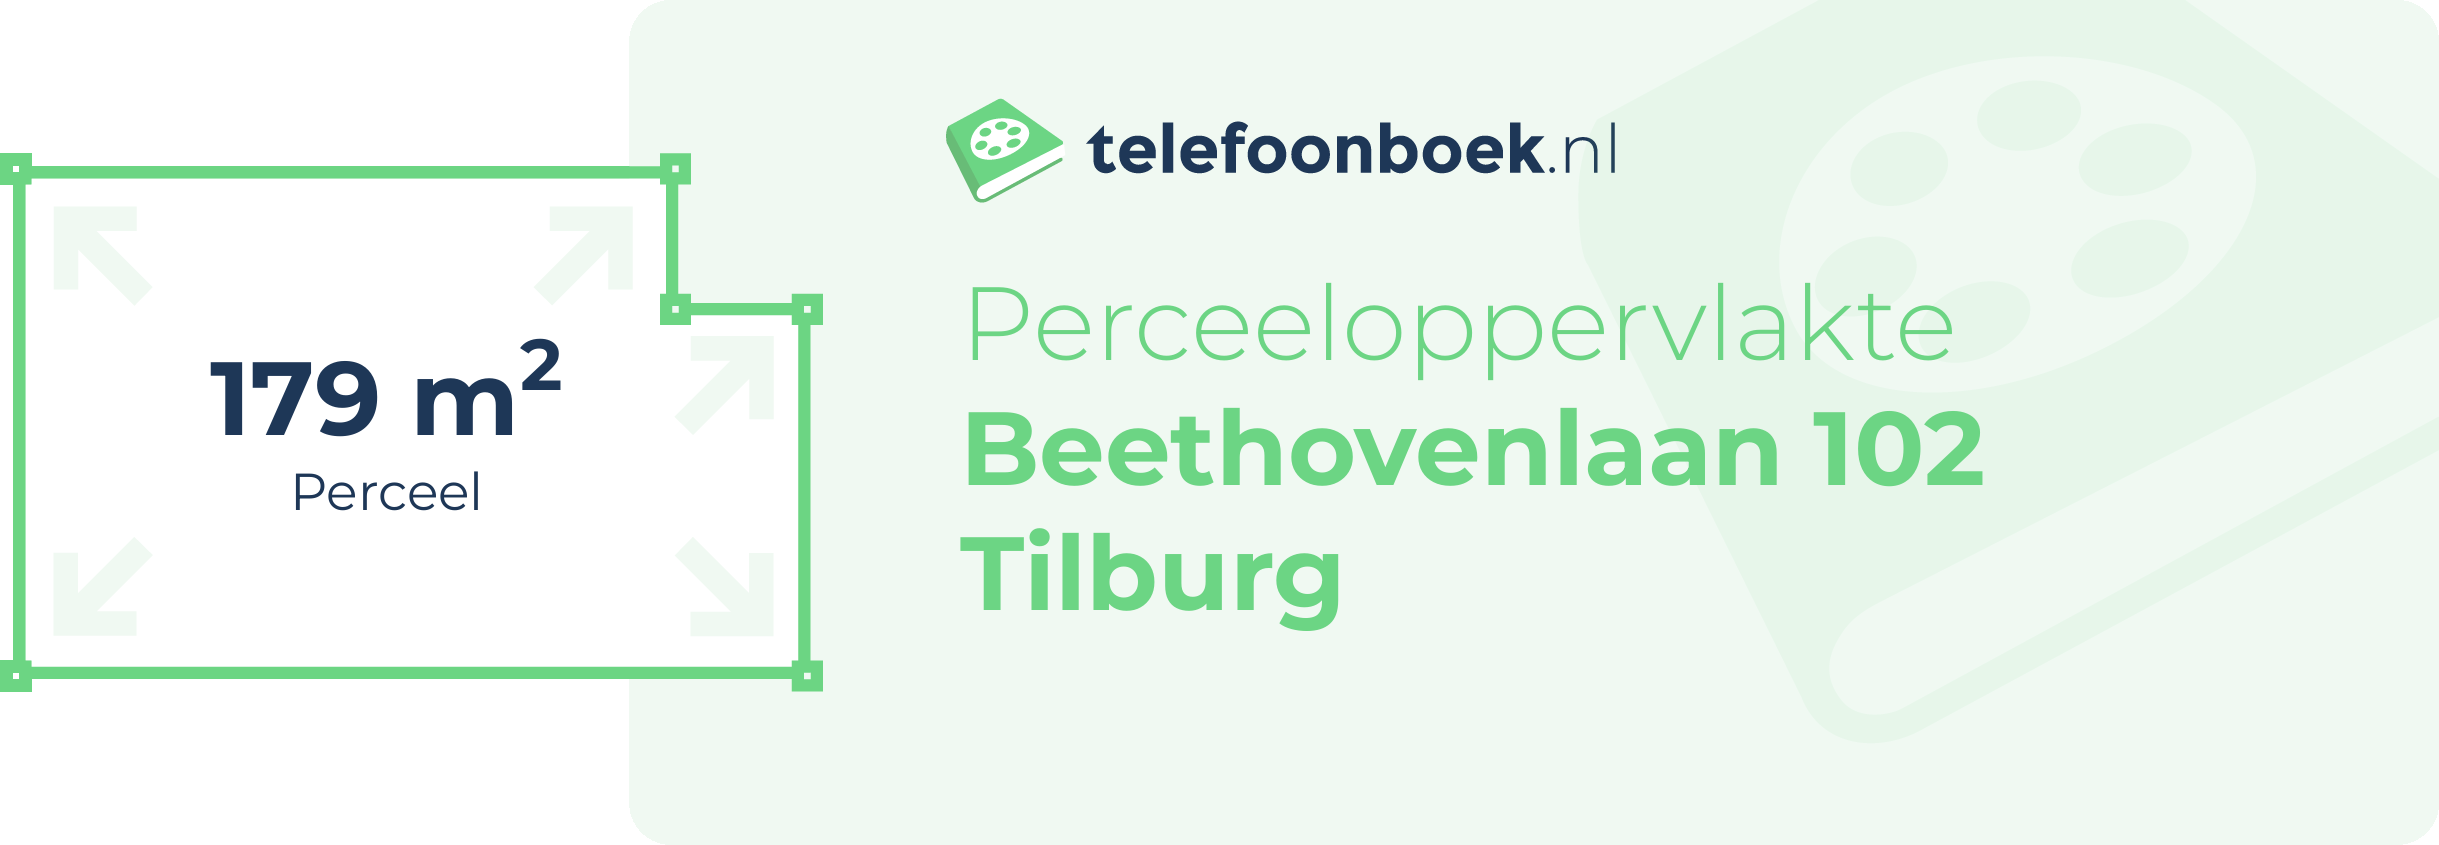 Perceeloppervlakte Beethovenlaan 102 Tilburg